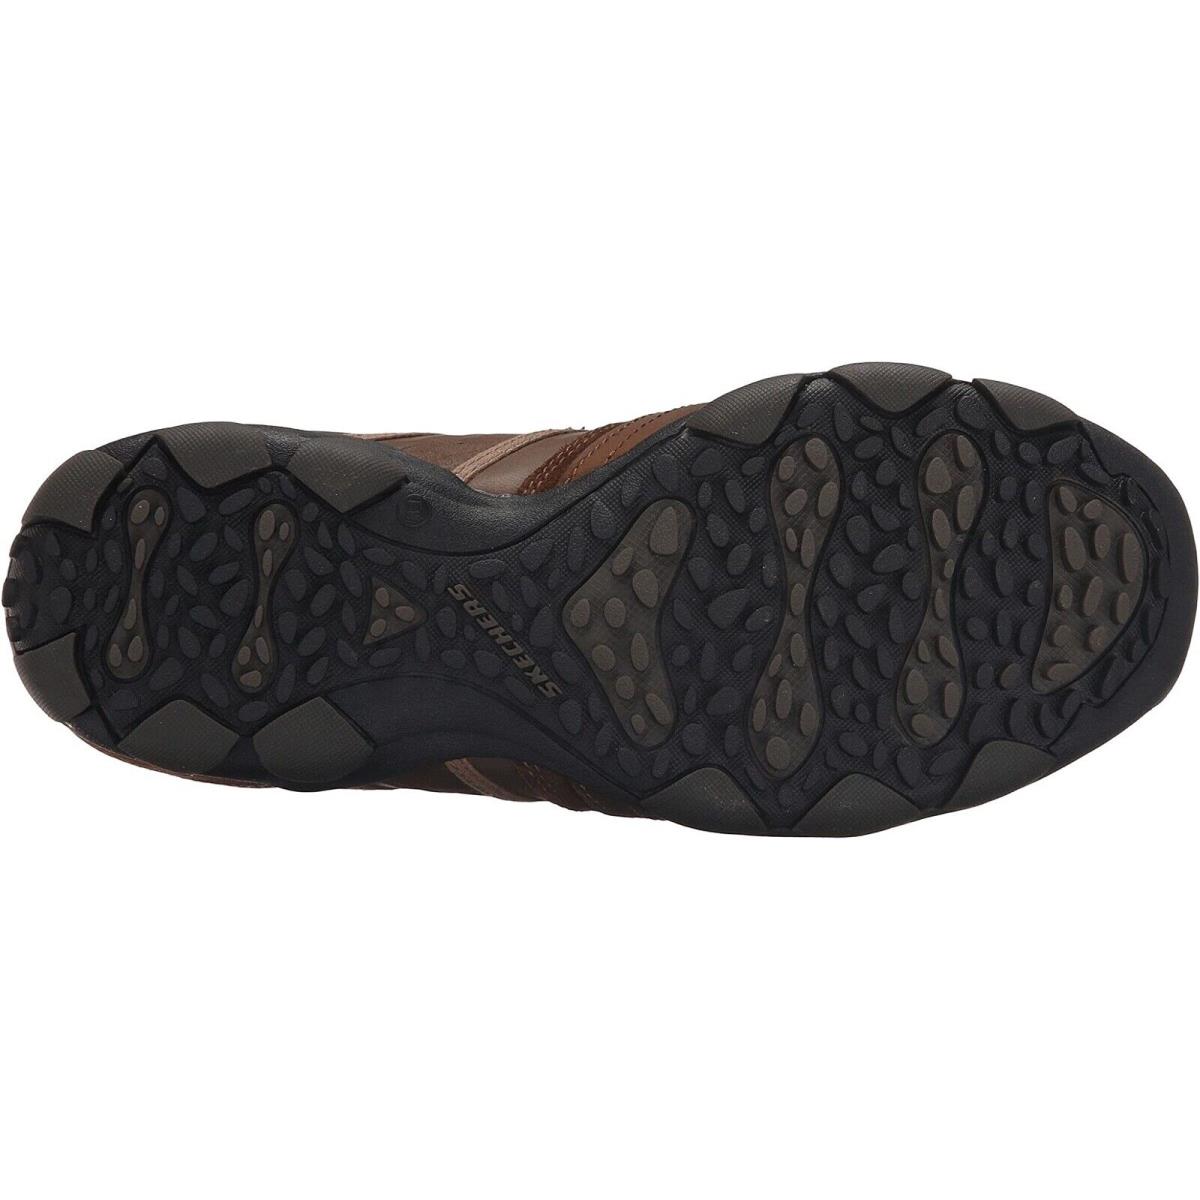 Skechers Men Diameter Zinroy Memory Foam Leather Shoes 64275 Cdb Brown Size 7